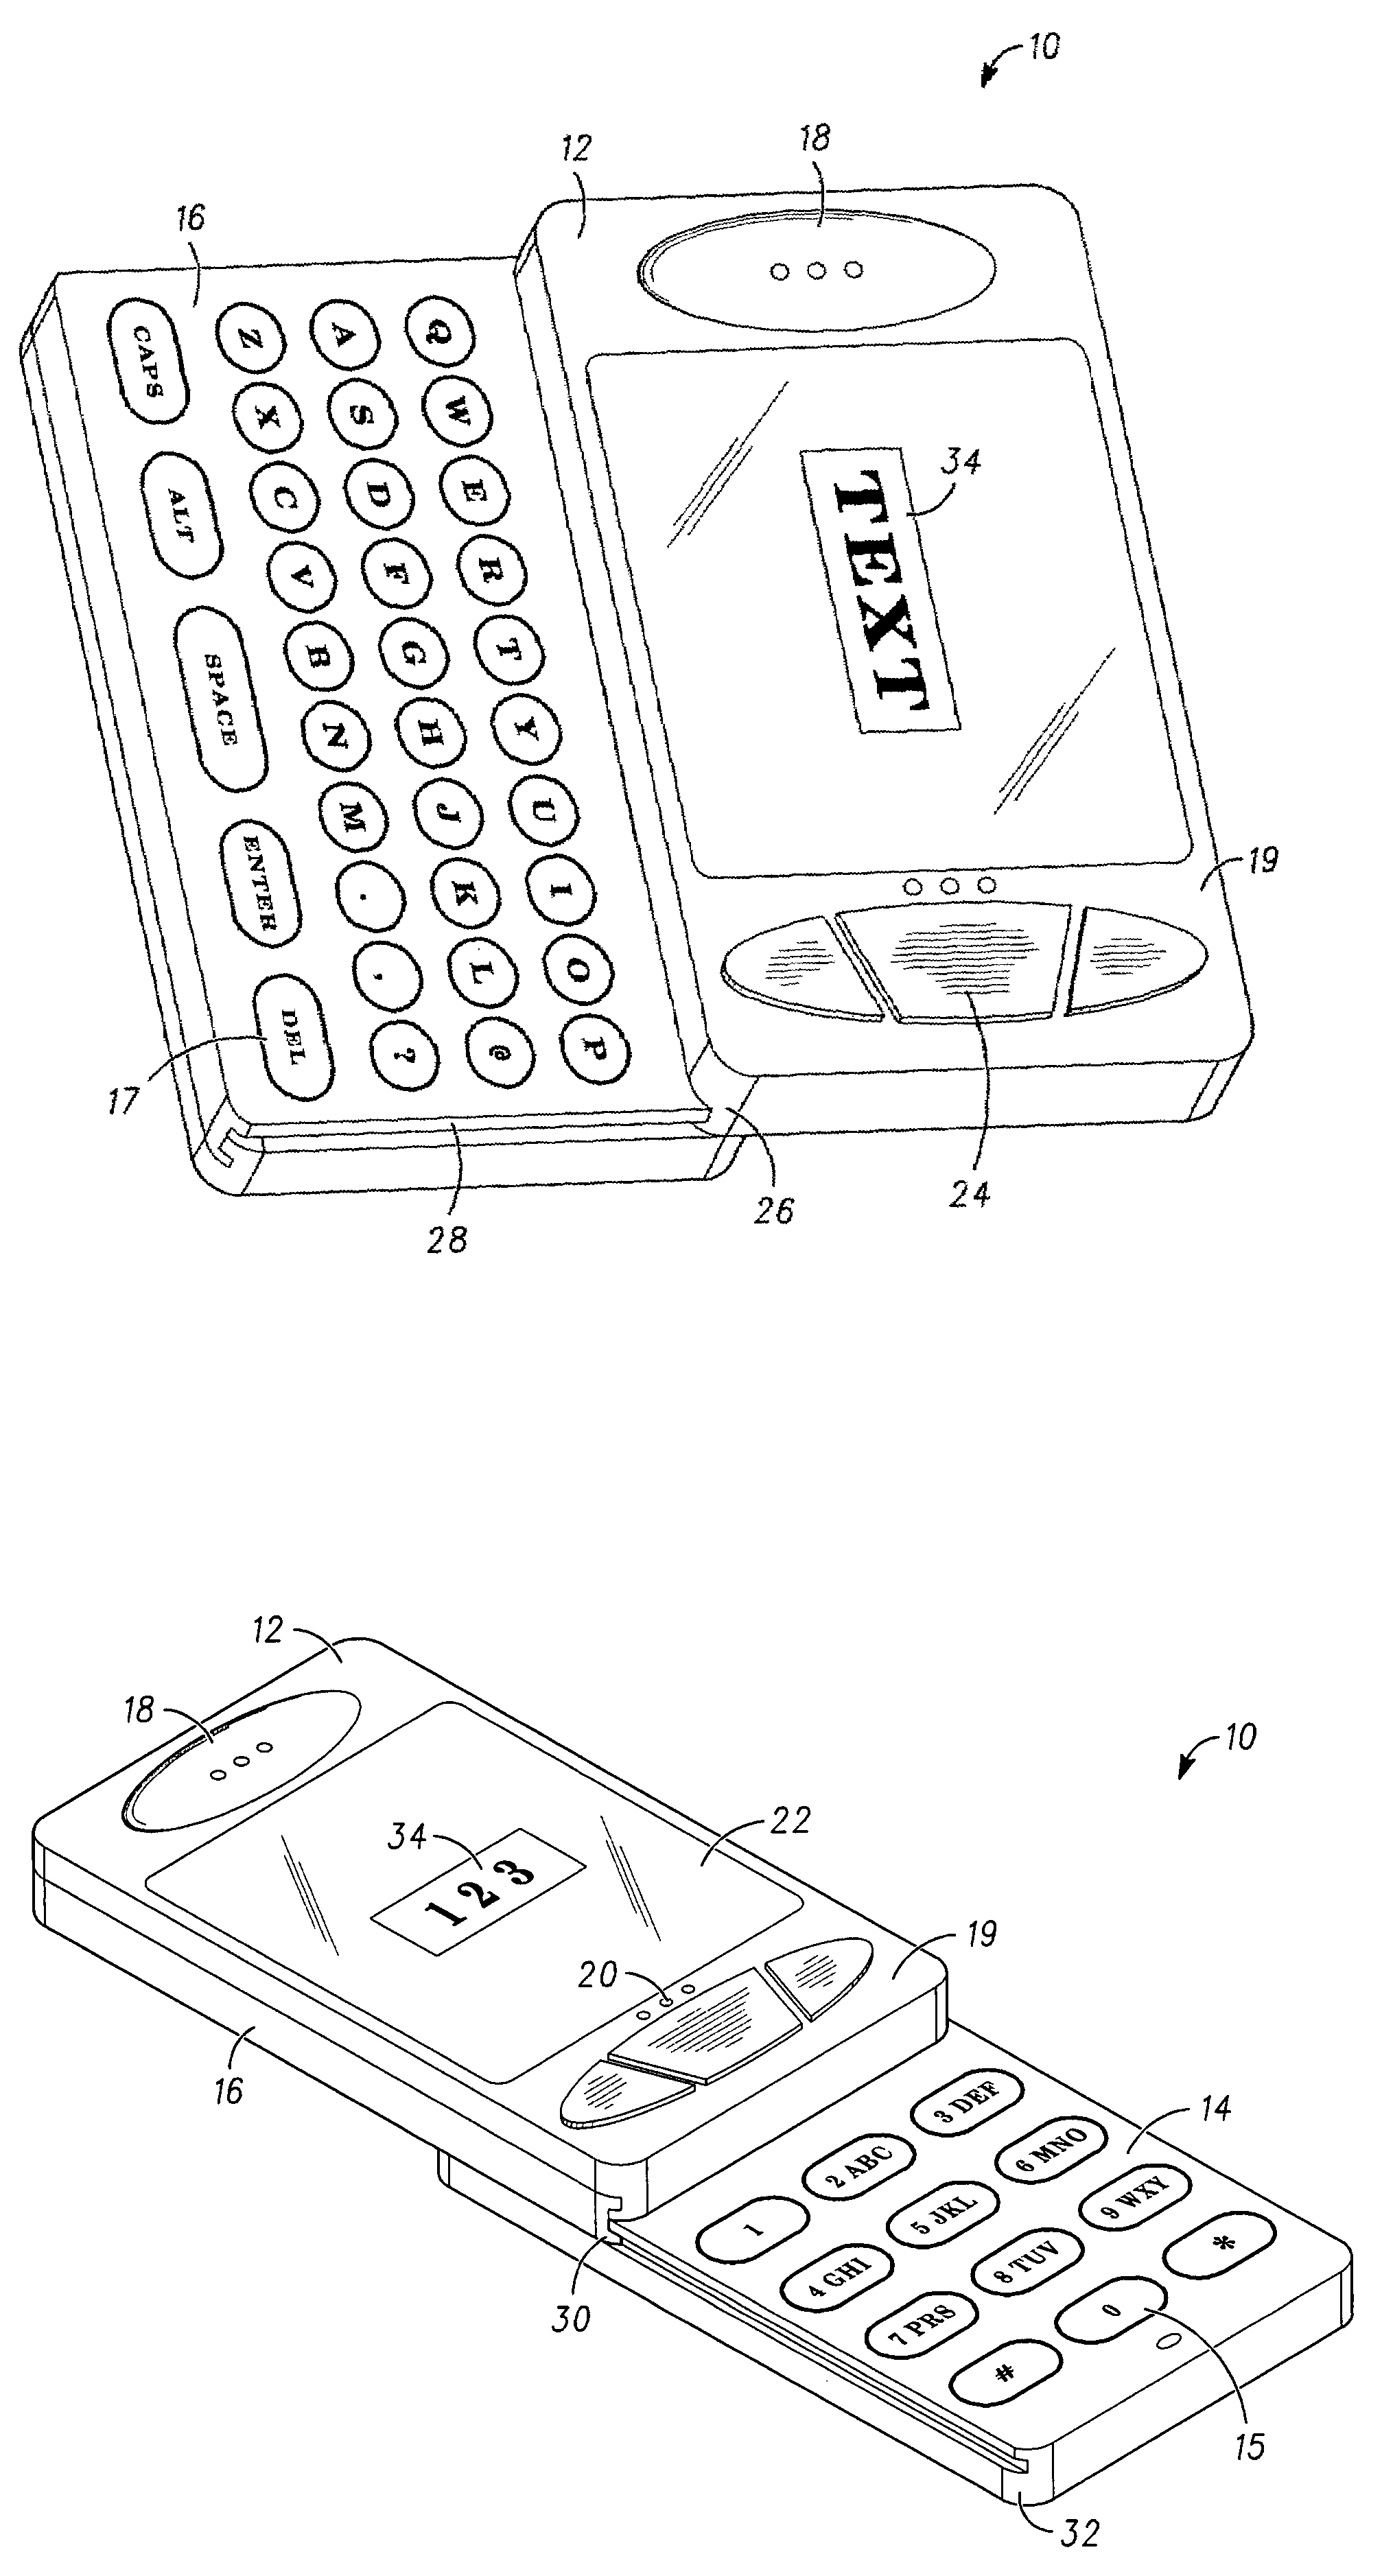 Communication device having multiple keypads